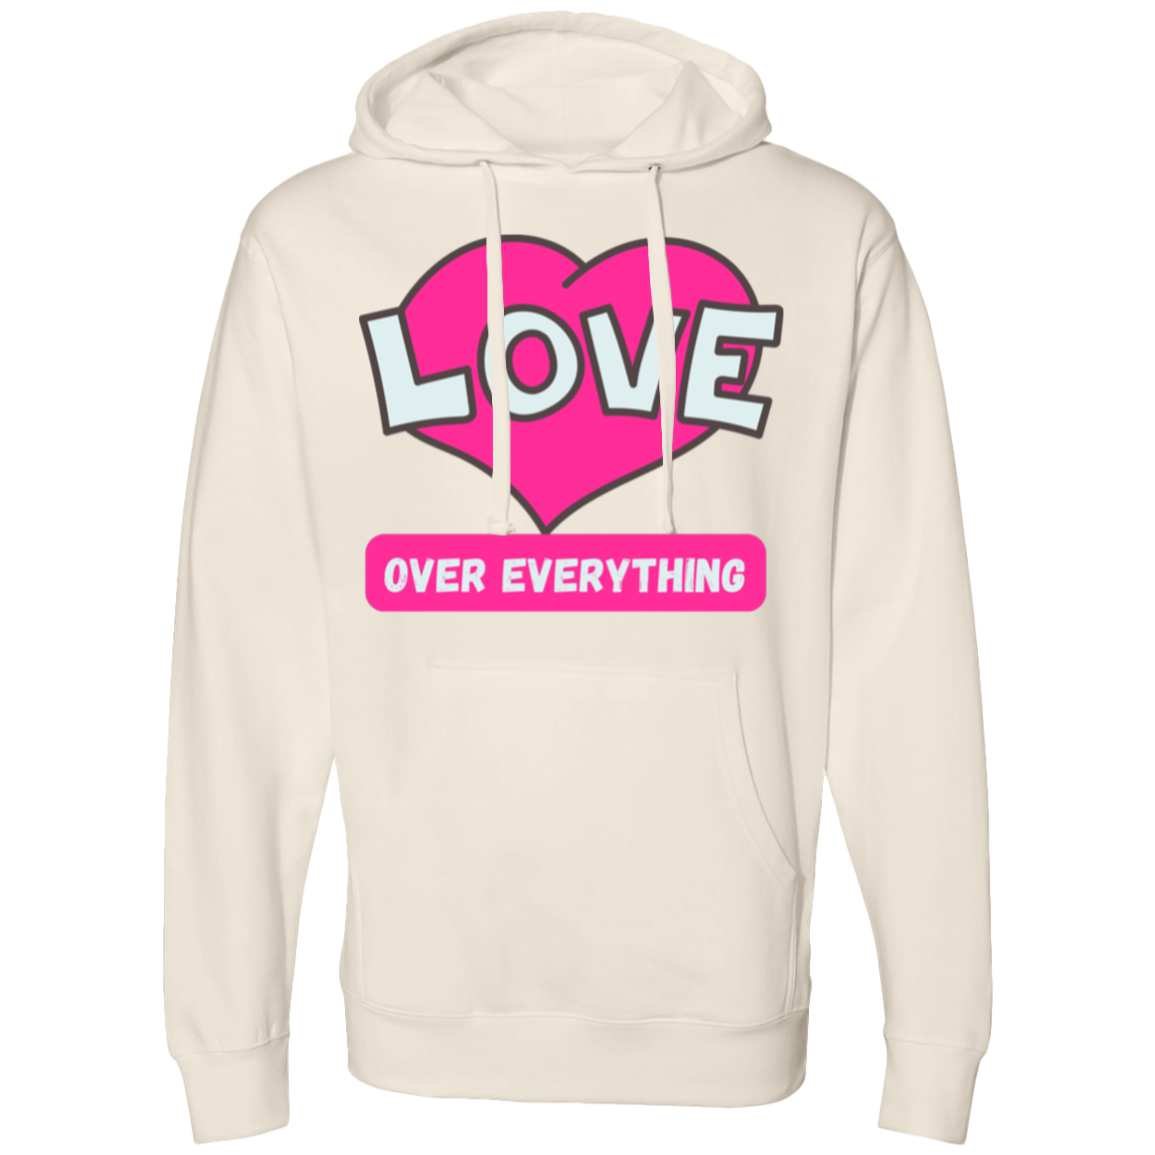 Love over everything!  Hooded Sweatshirt